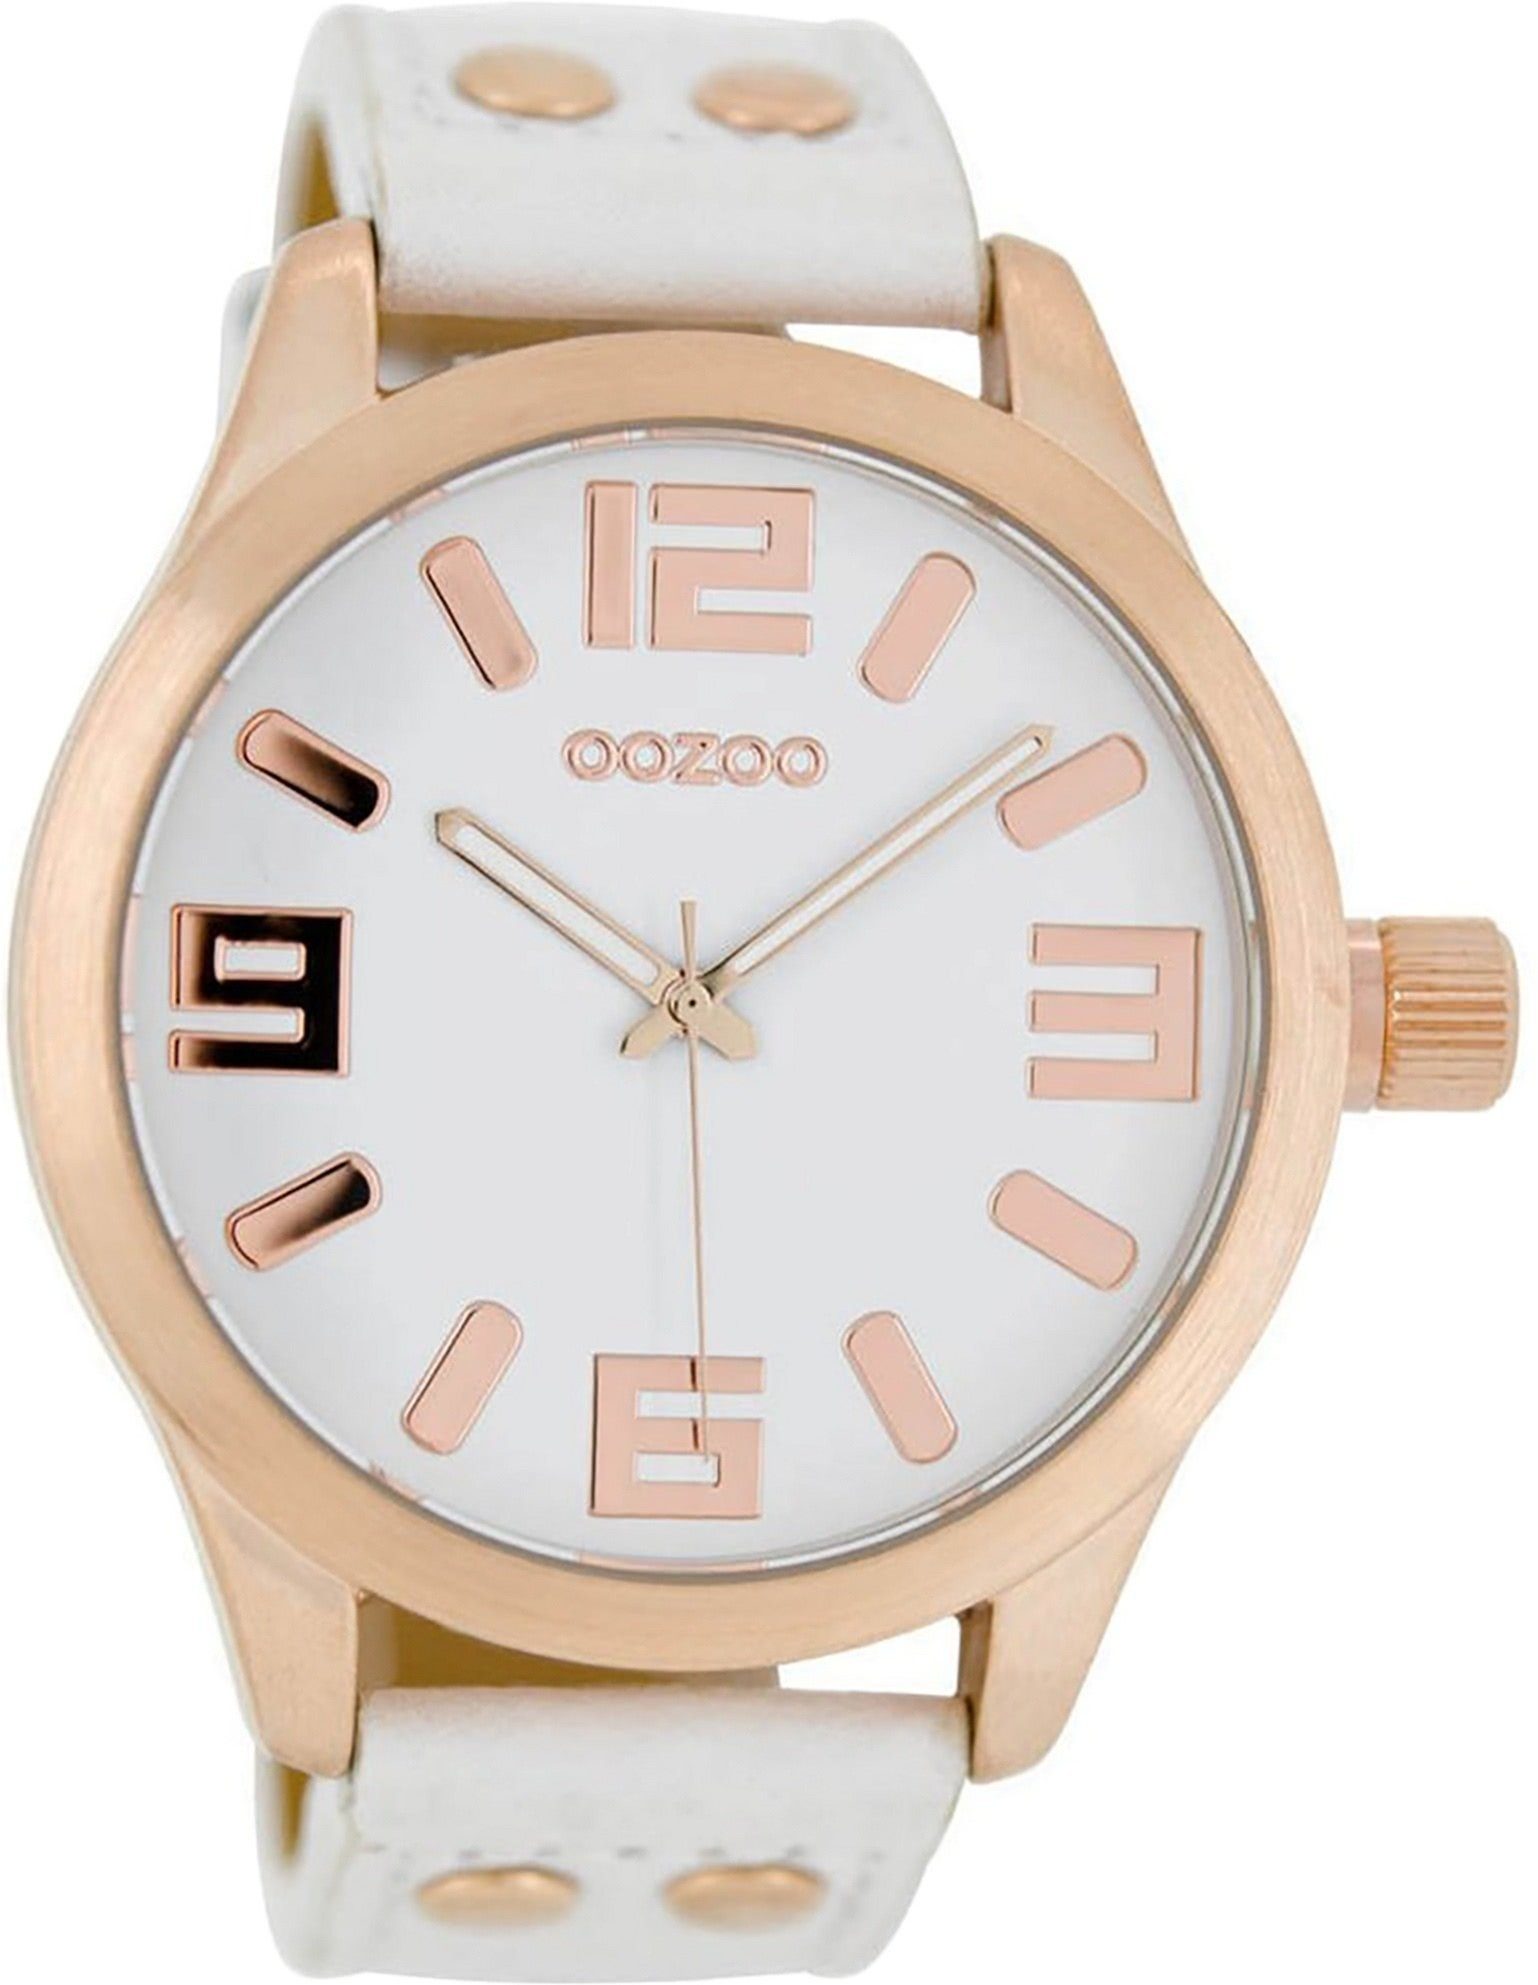 OOZOO Quarzuhr Oozoo Quarz-Uhr Damen rose Timepieces, Damenuhr Lederarmband weiß, rundes Gehäuse, extra groß (ca. 46mm)